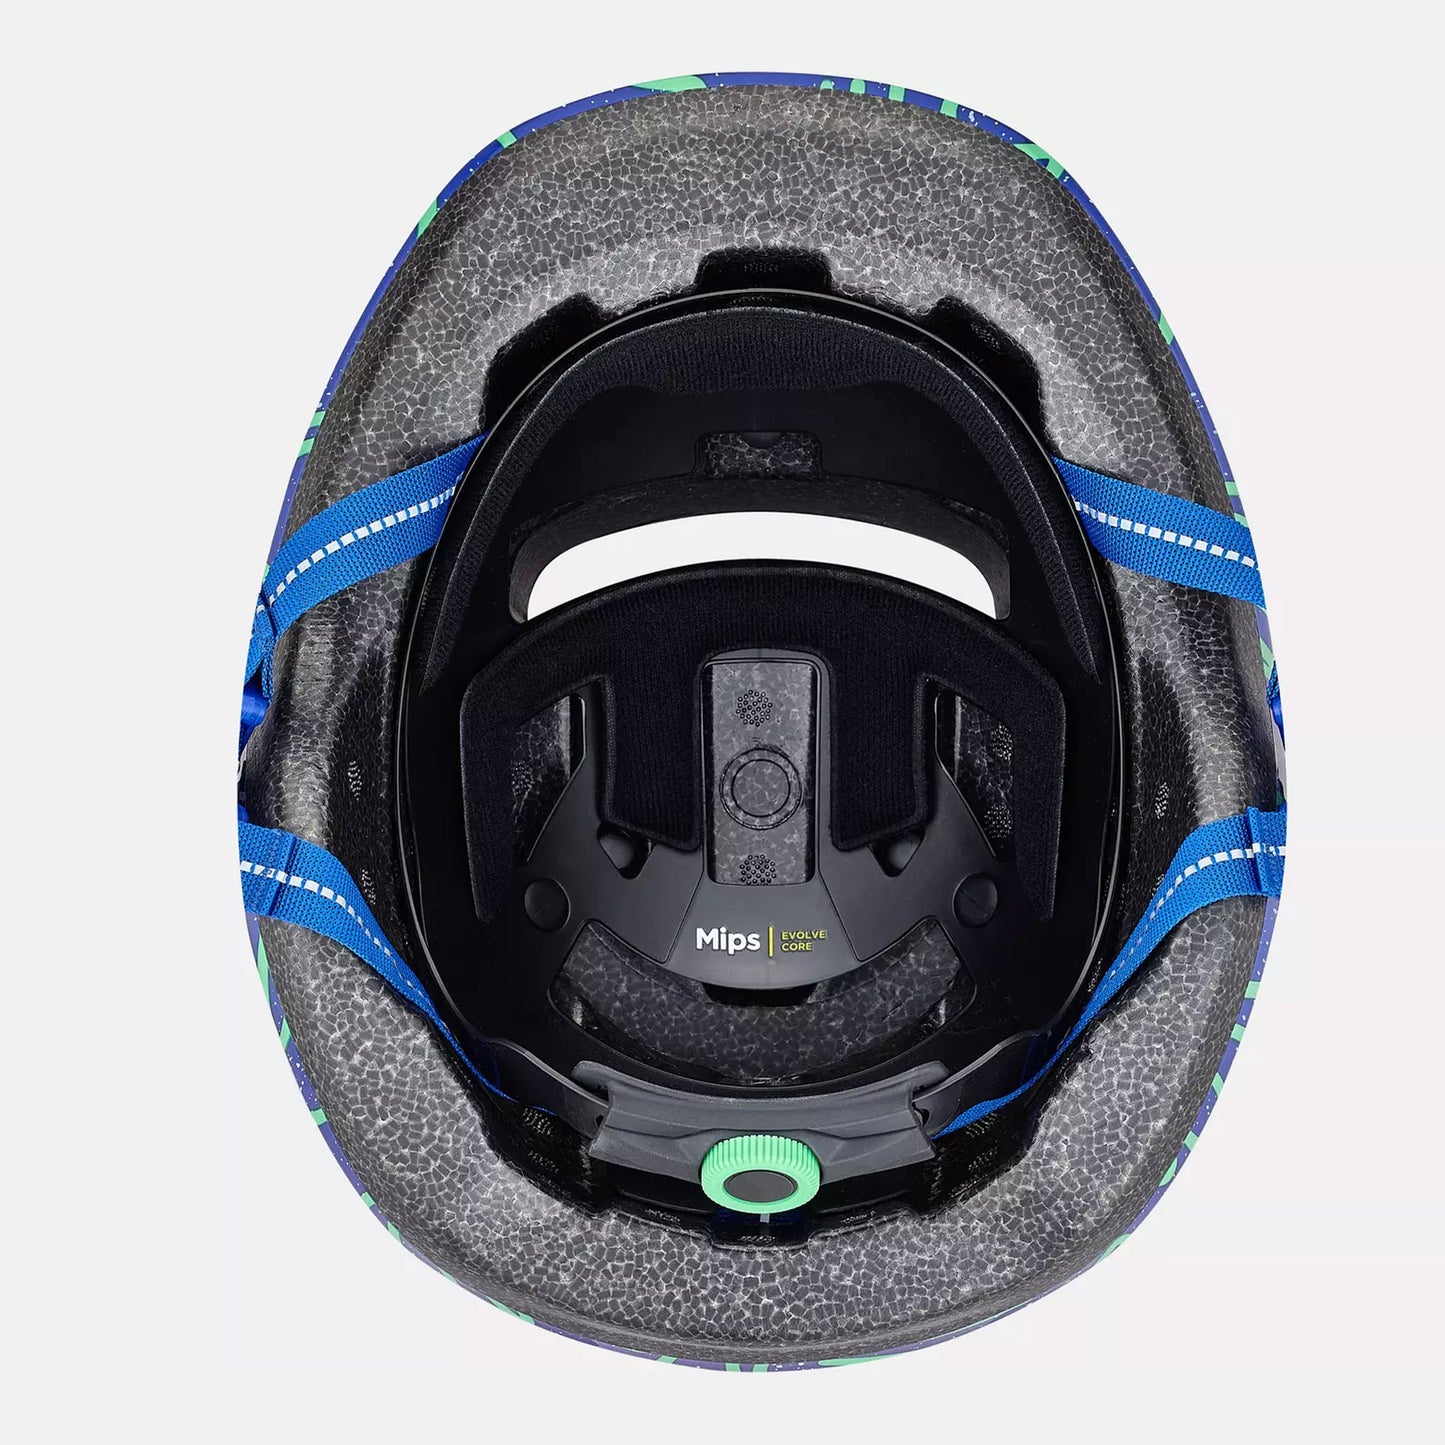 Specialized Mio 2 Mips Children's Helmet - Sapphire/Electric Green